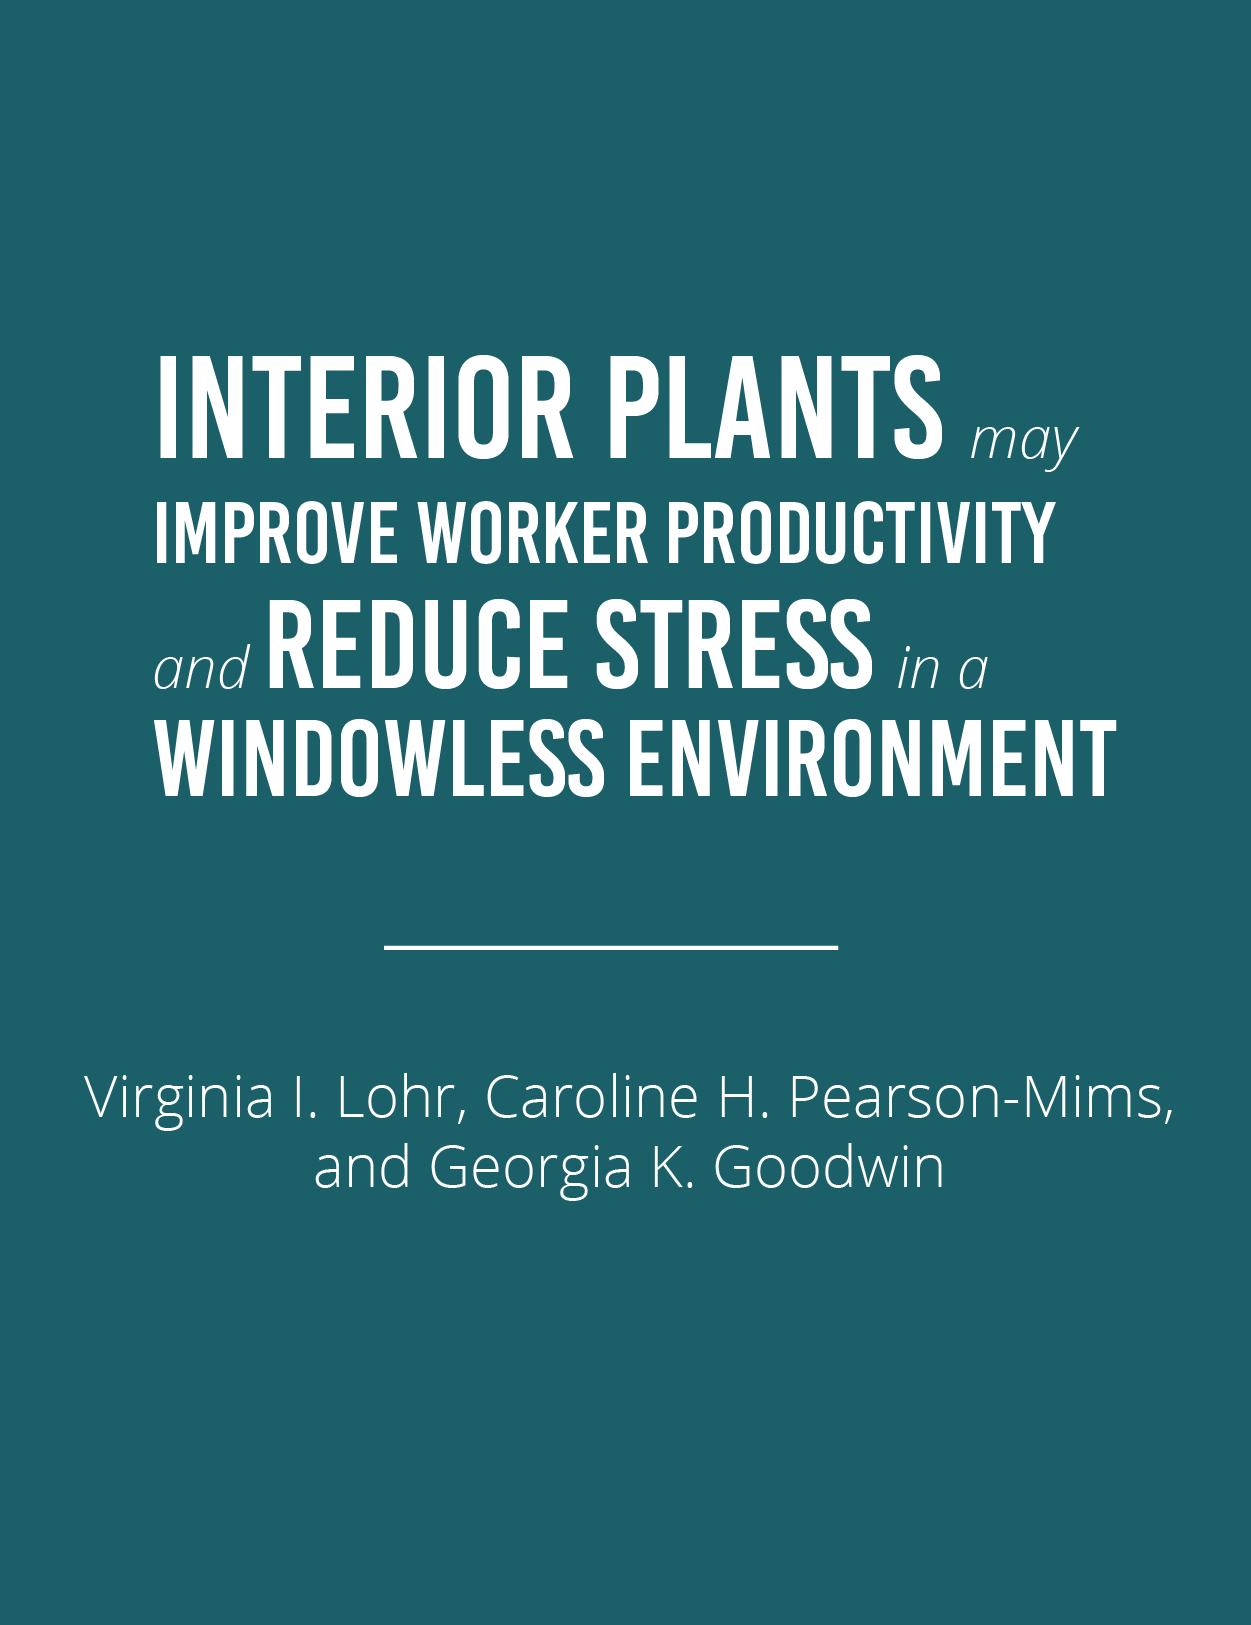 Interior Plants Improve Productivity & Reduce StressFeatured Image